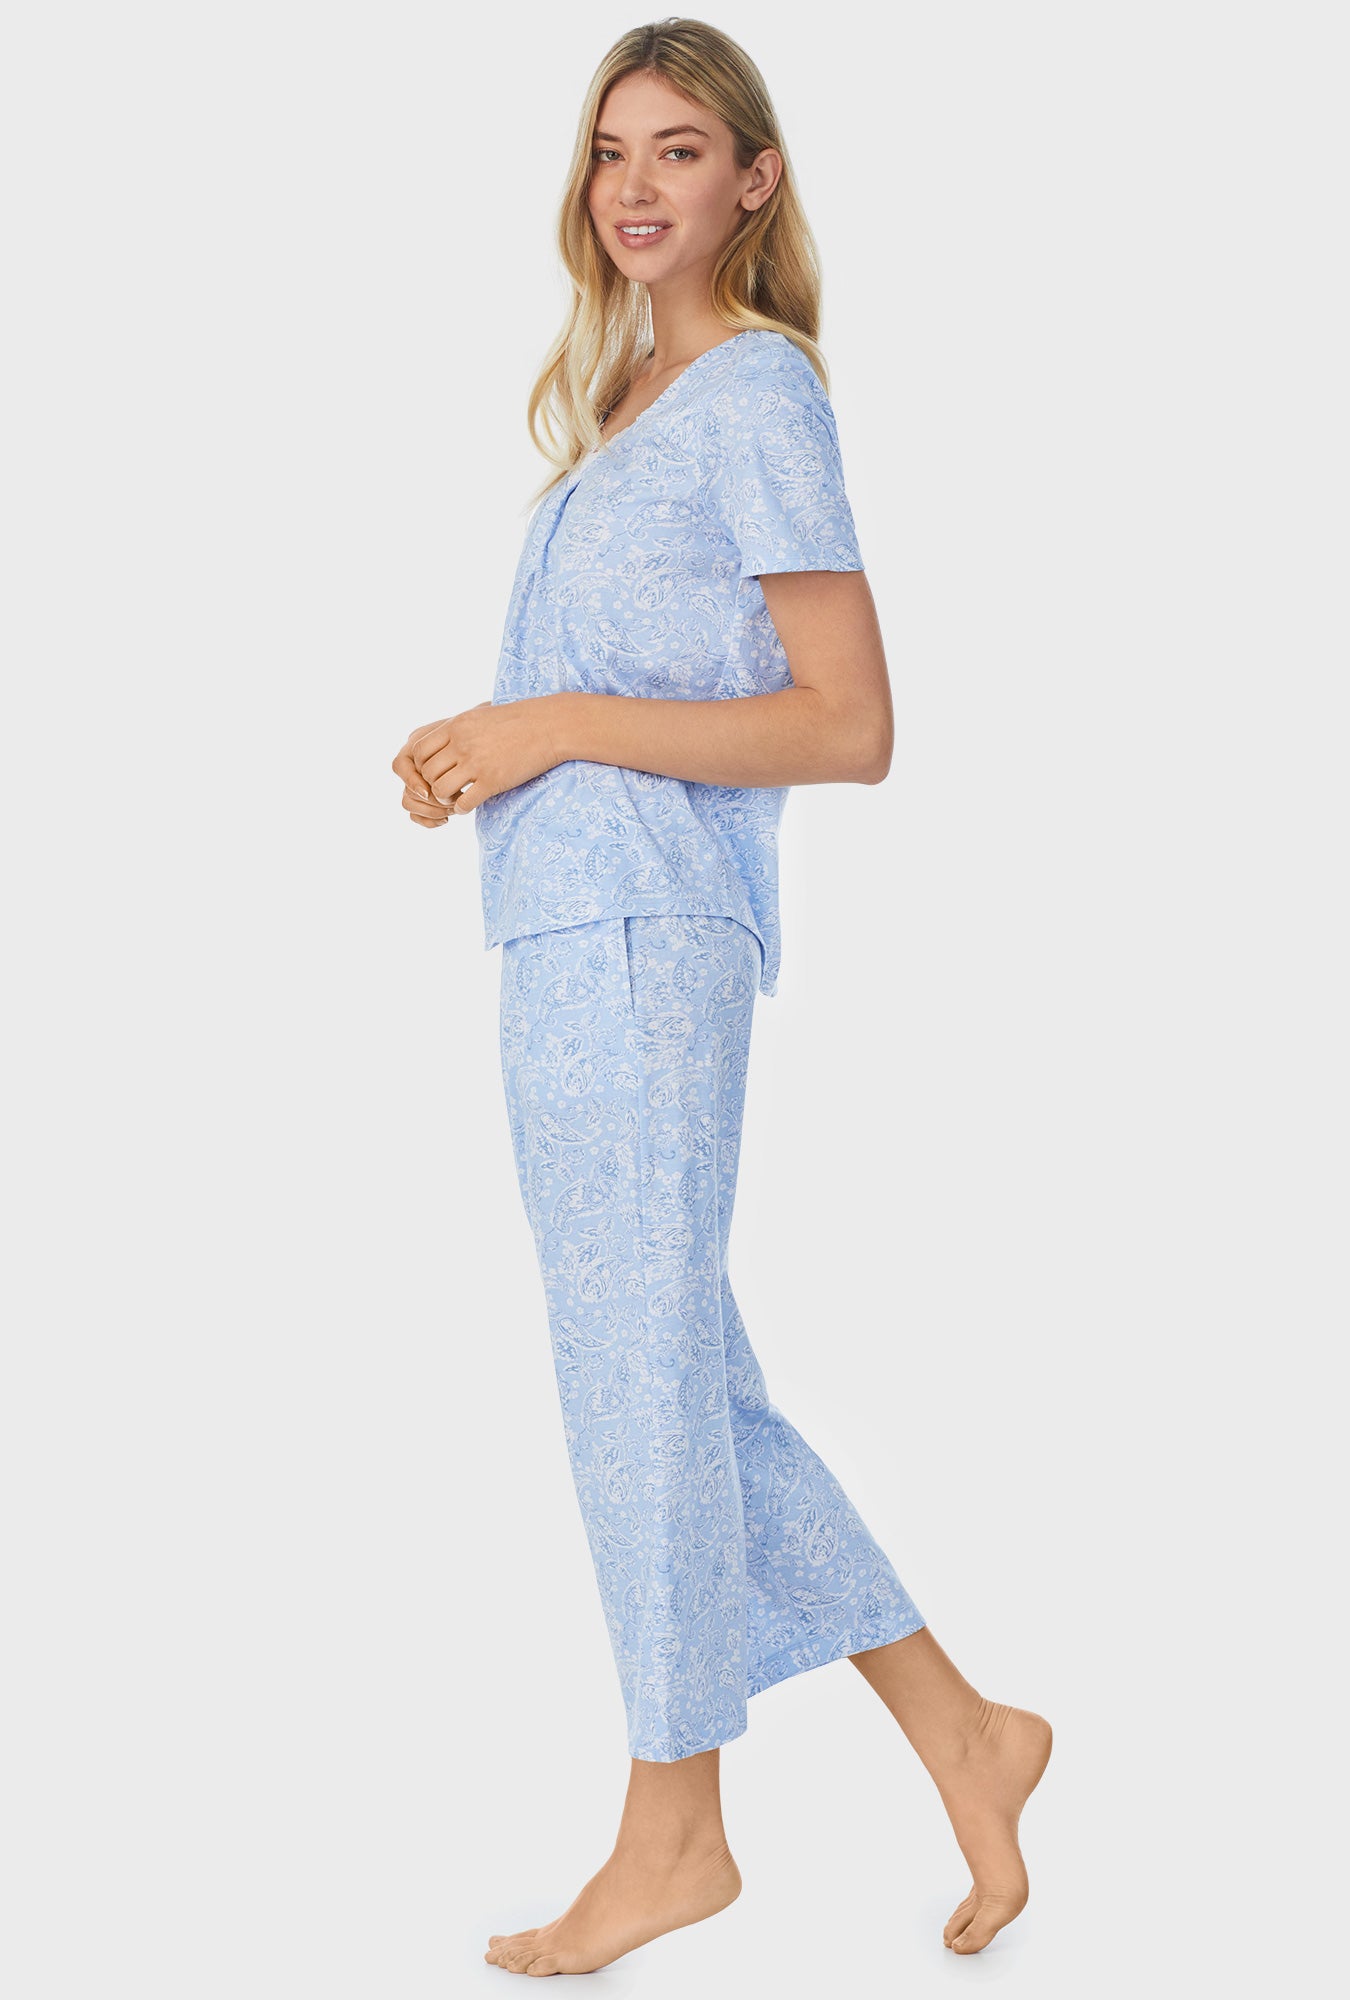 A lady wearing blue short sleeve capri pajama set with blooming paisley print.